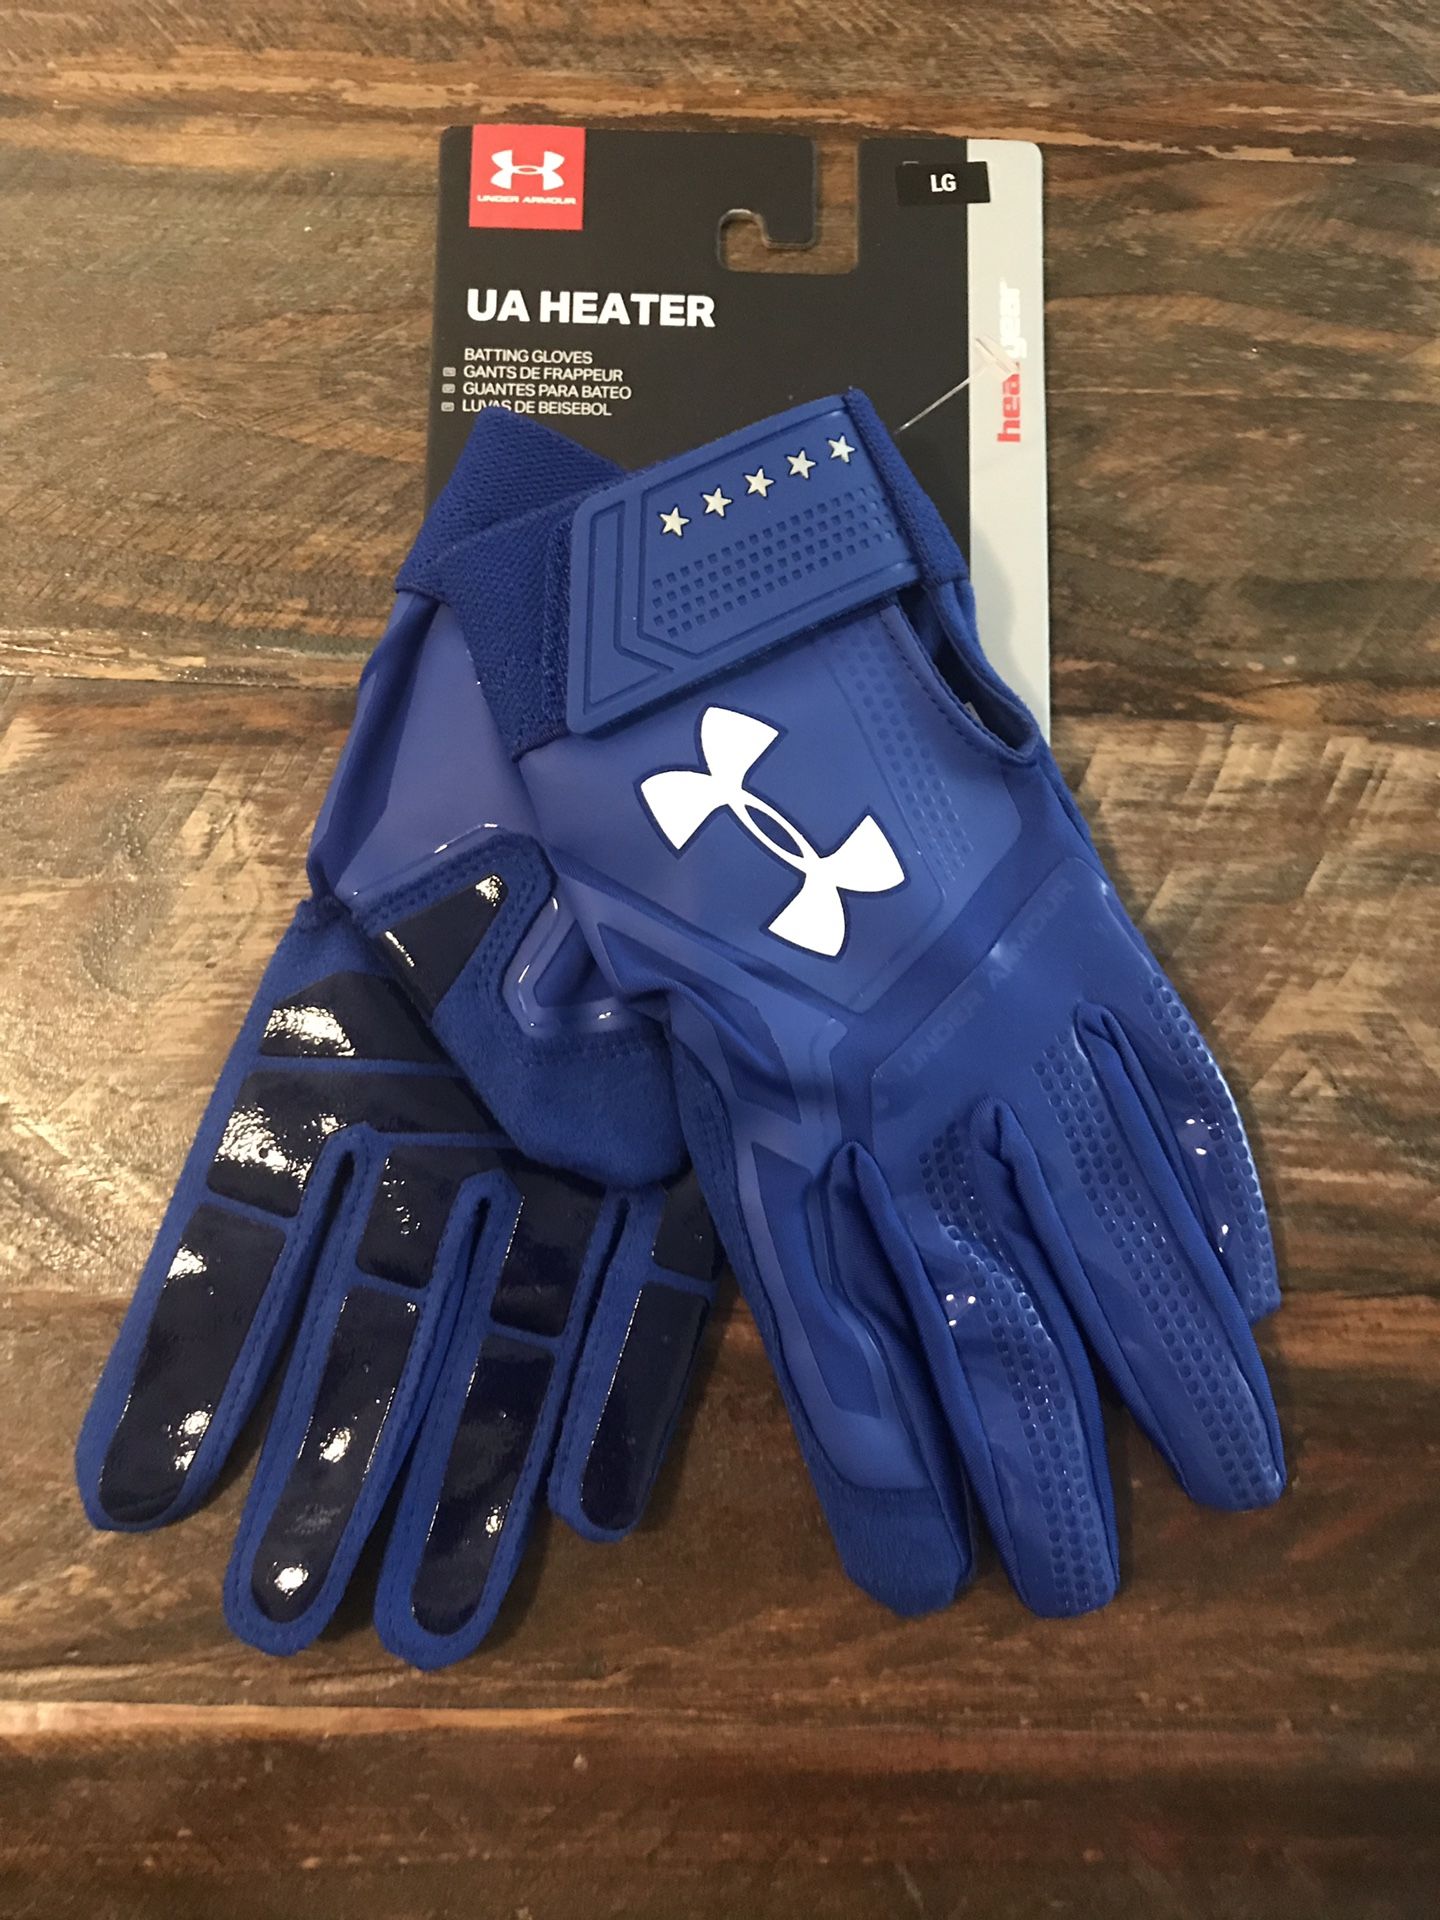 New! Under Armour Heater Baseball Blue Batting Gloves Large